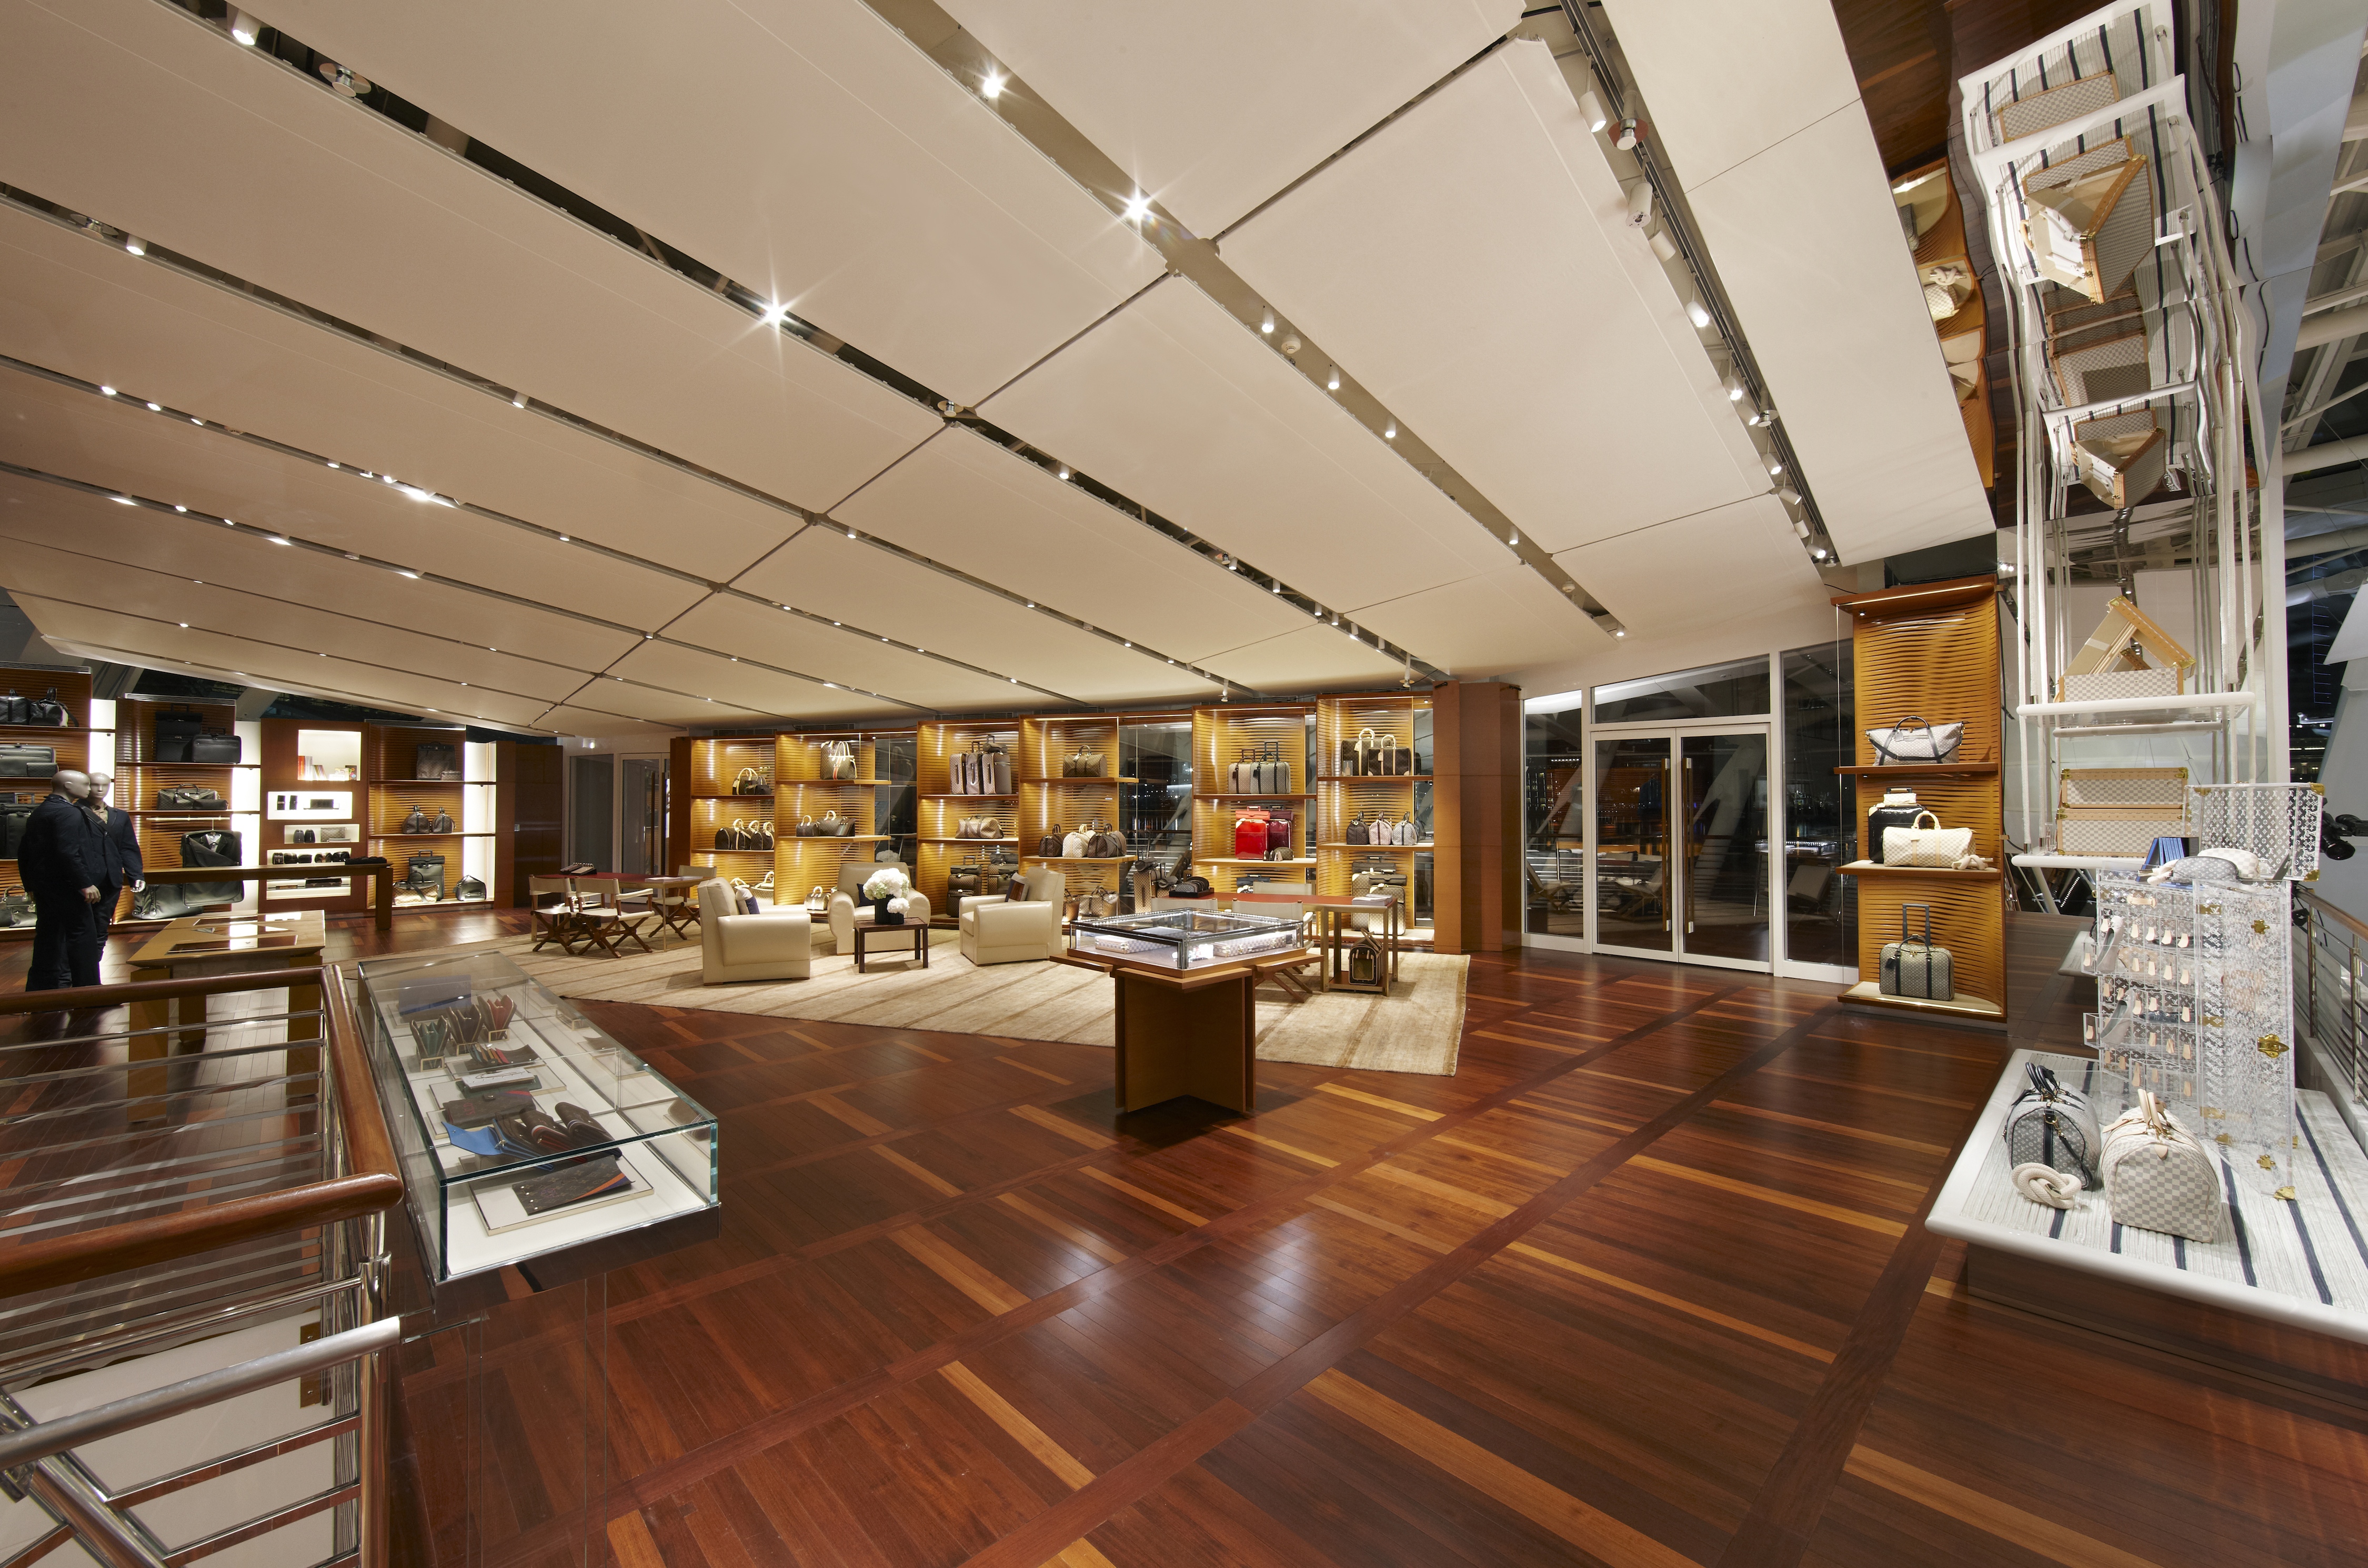 Louis Vuitton Warehouse Salaries